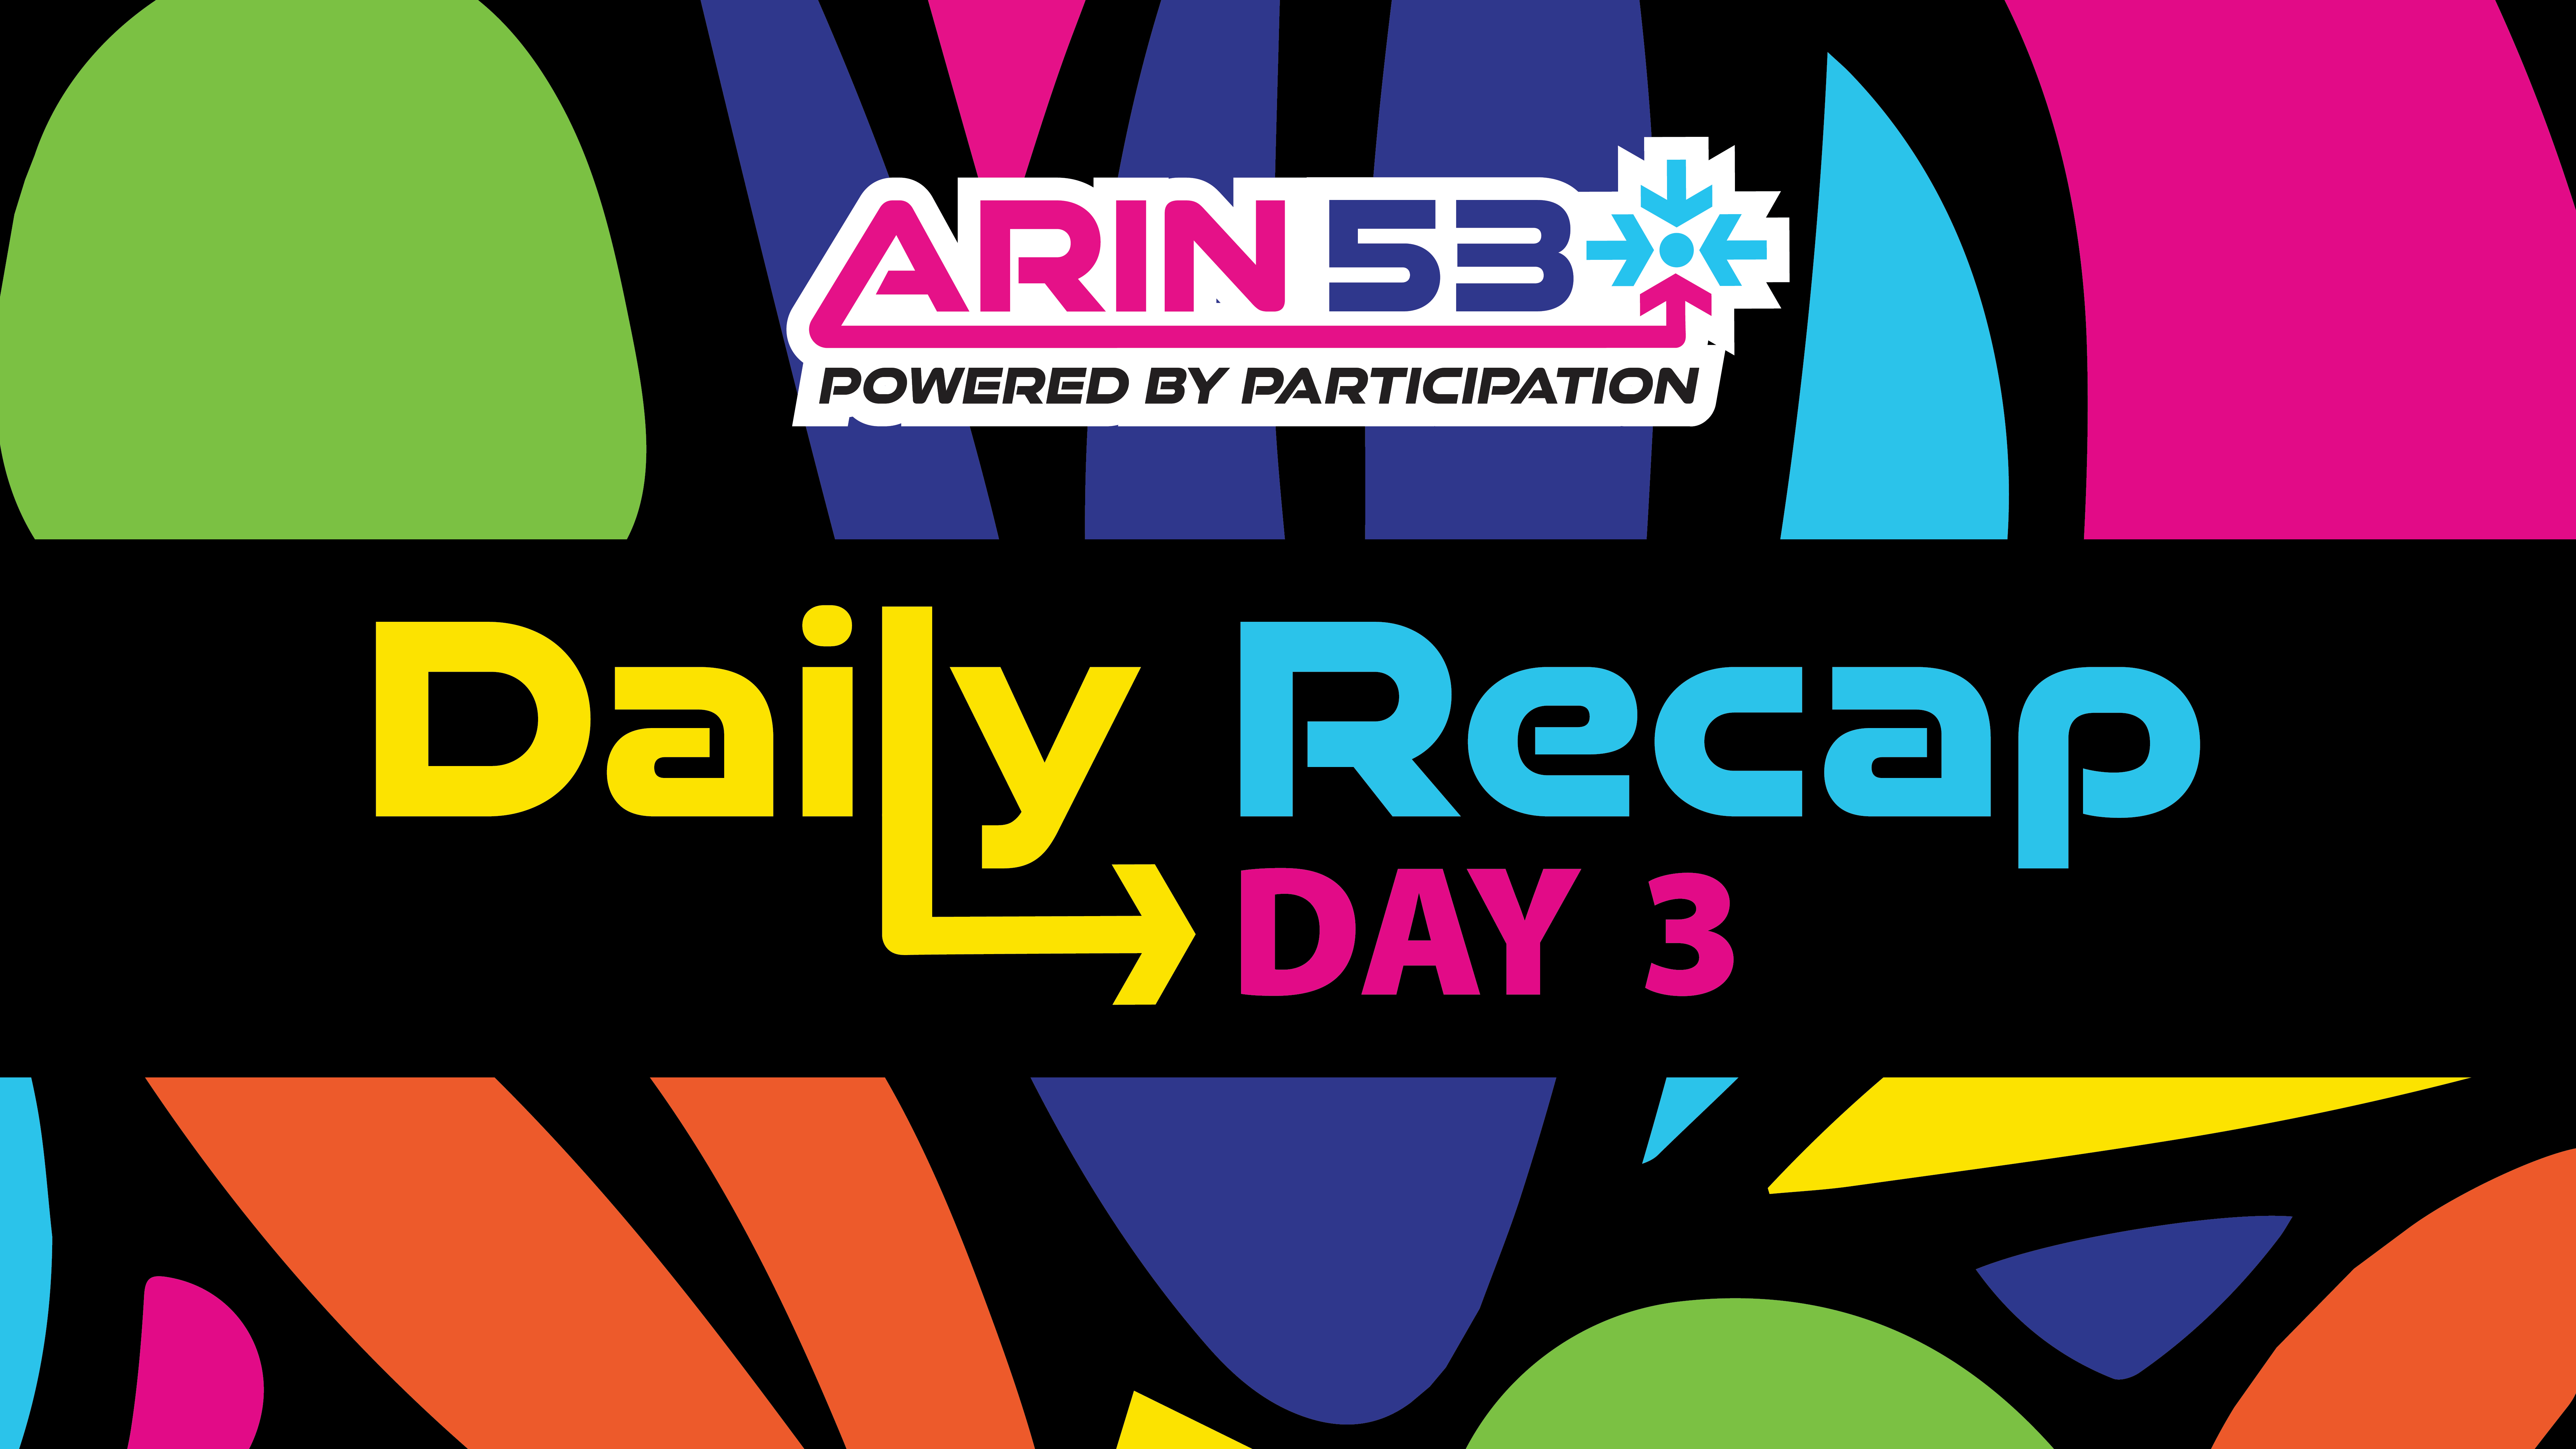 Read the blog ARIN 53 Day 3 Recap